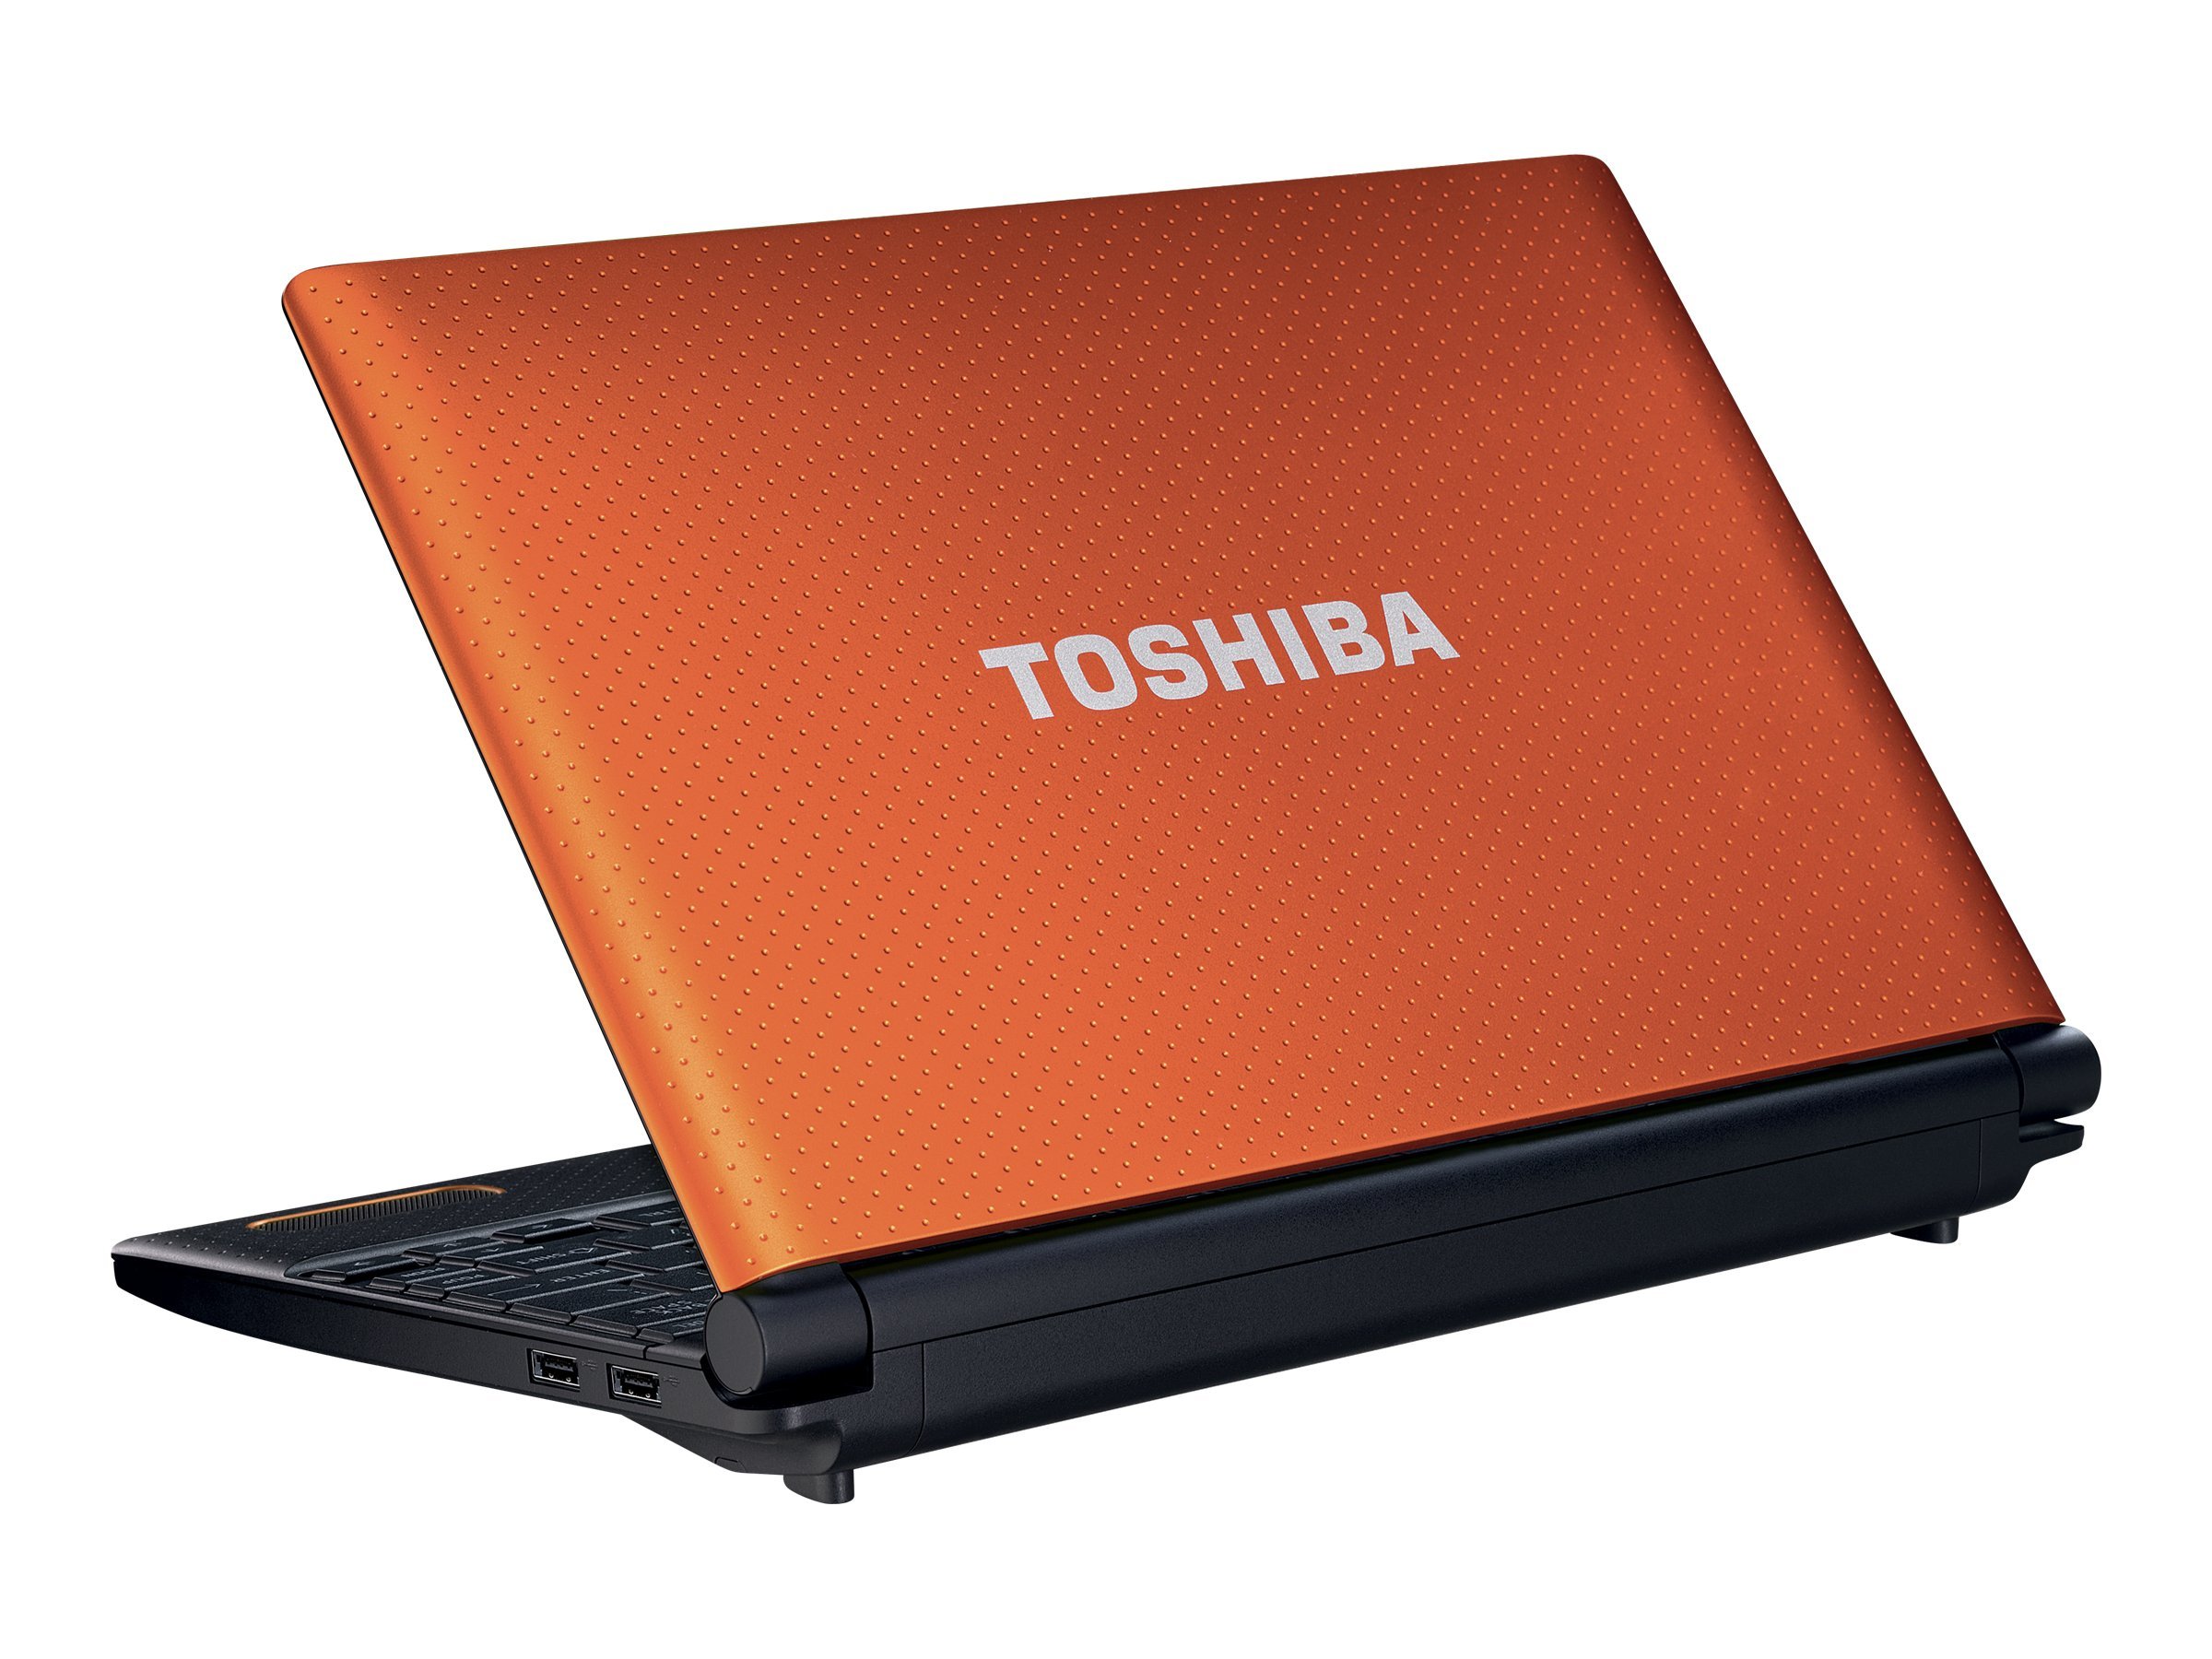 Toshiba NB520 (125)